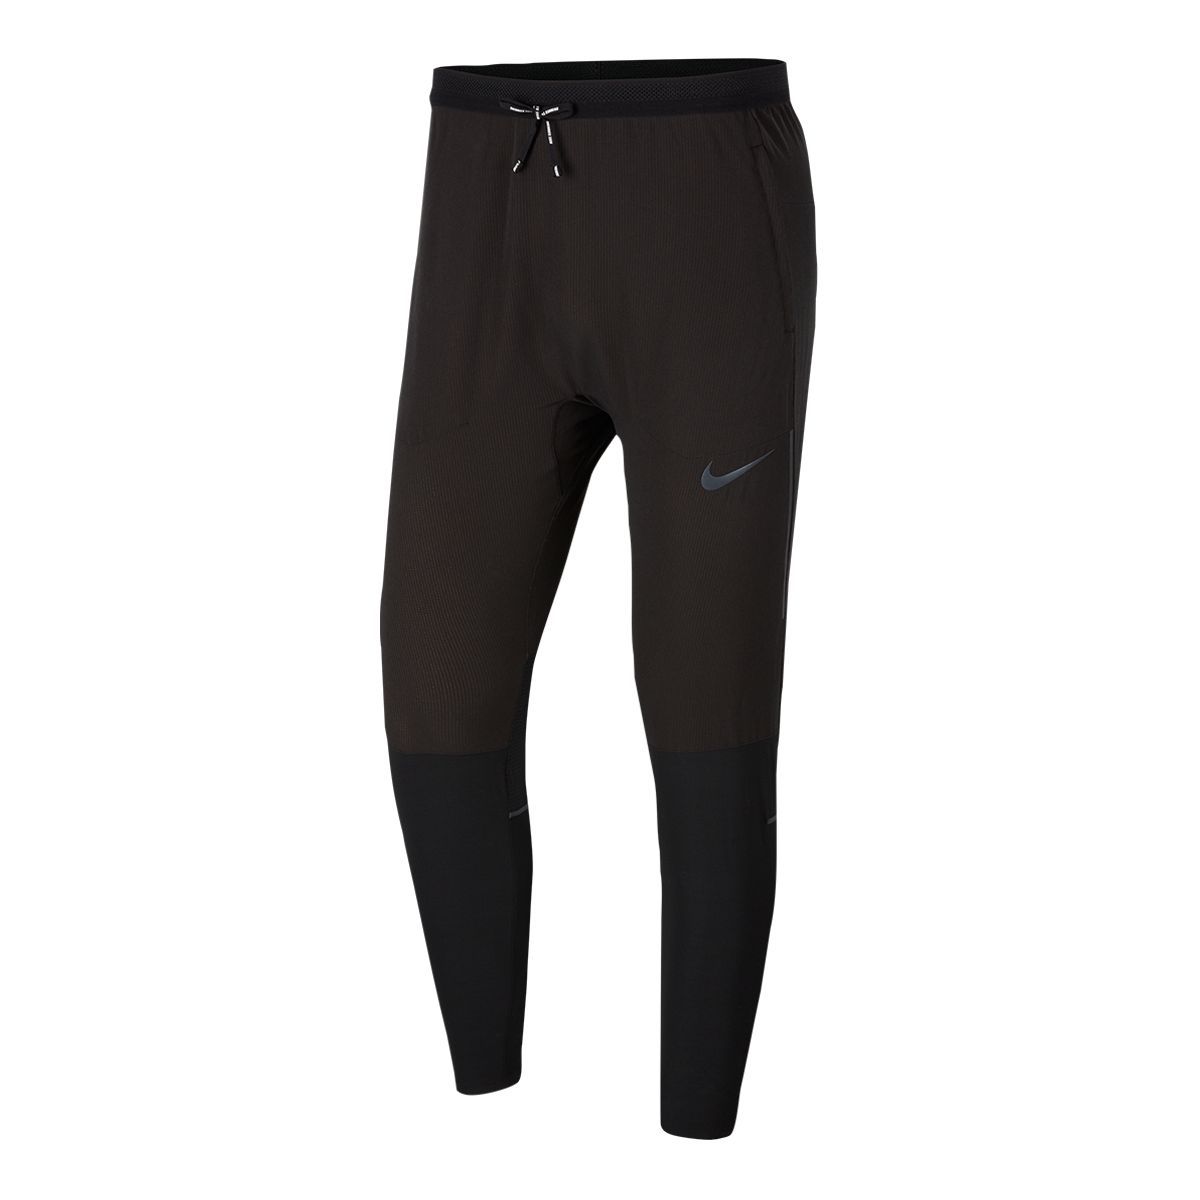 Nike Swift Run Pant  BlackReflect Black  Mens Clothing  928583010   ProDirect Running